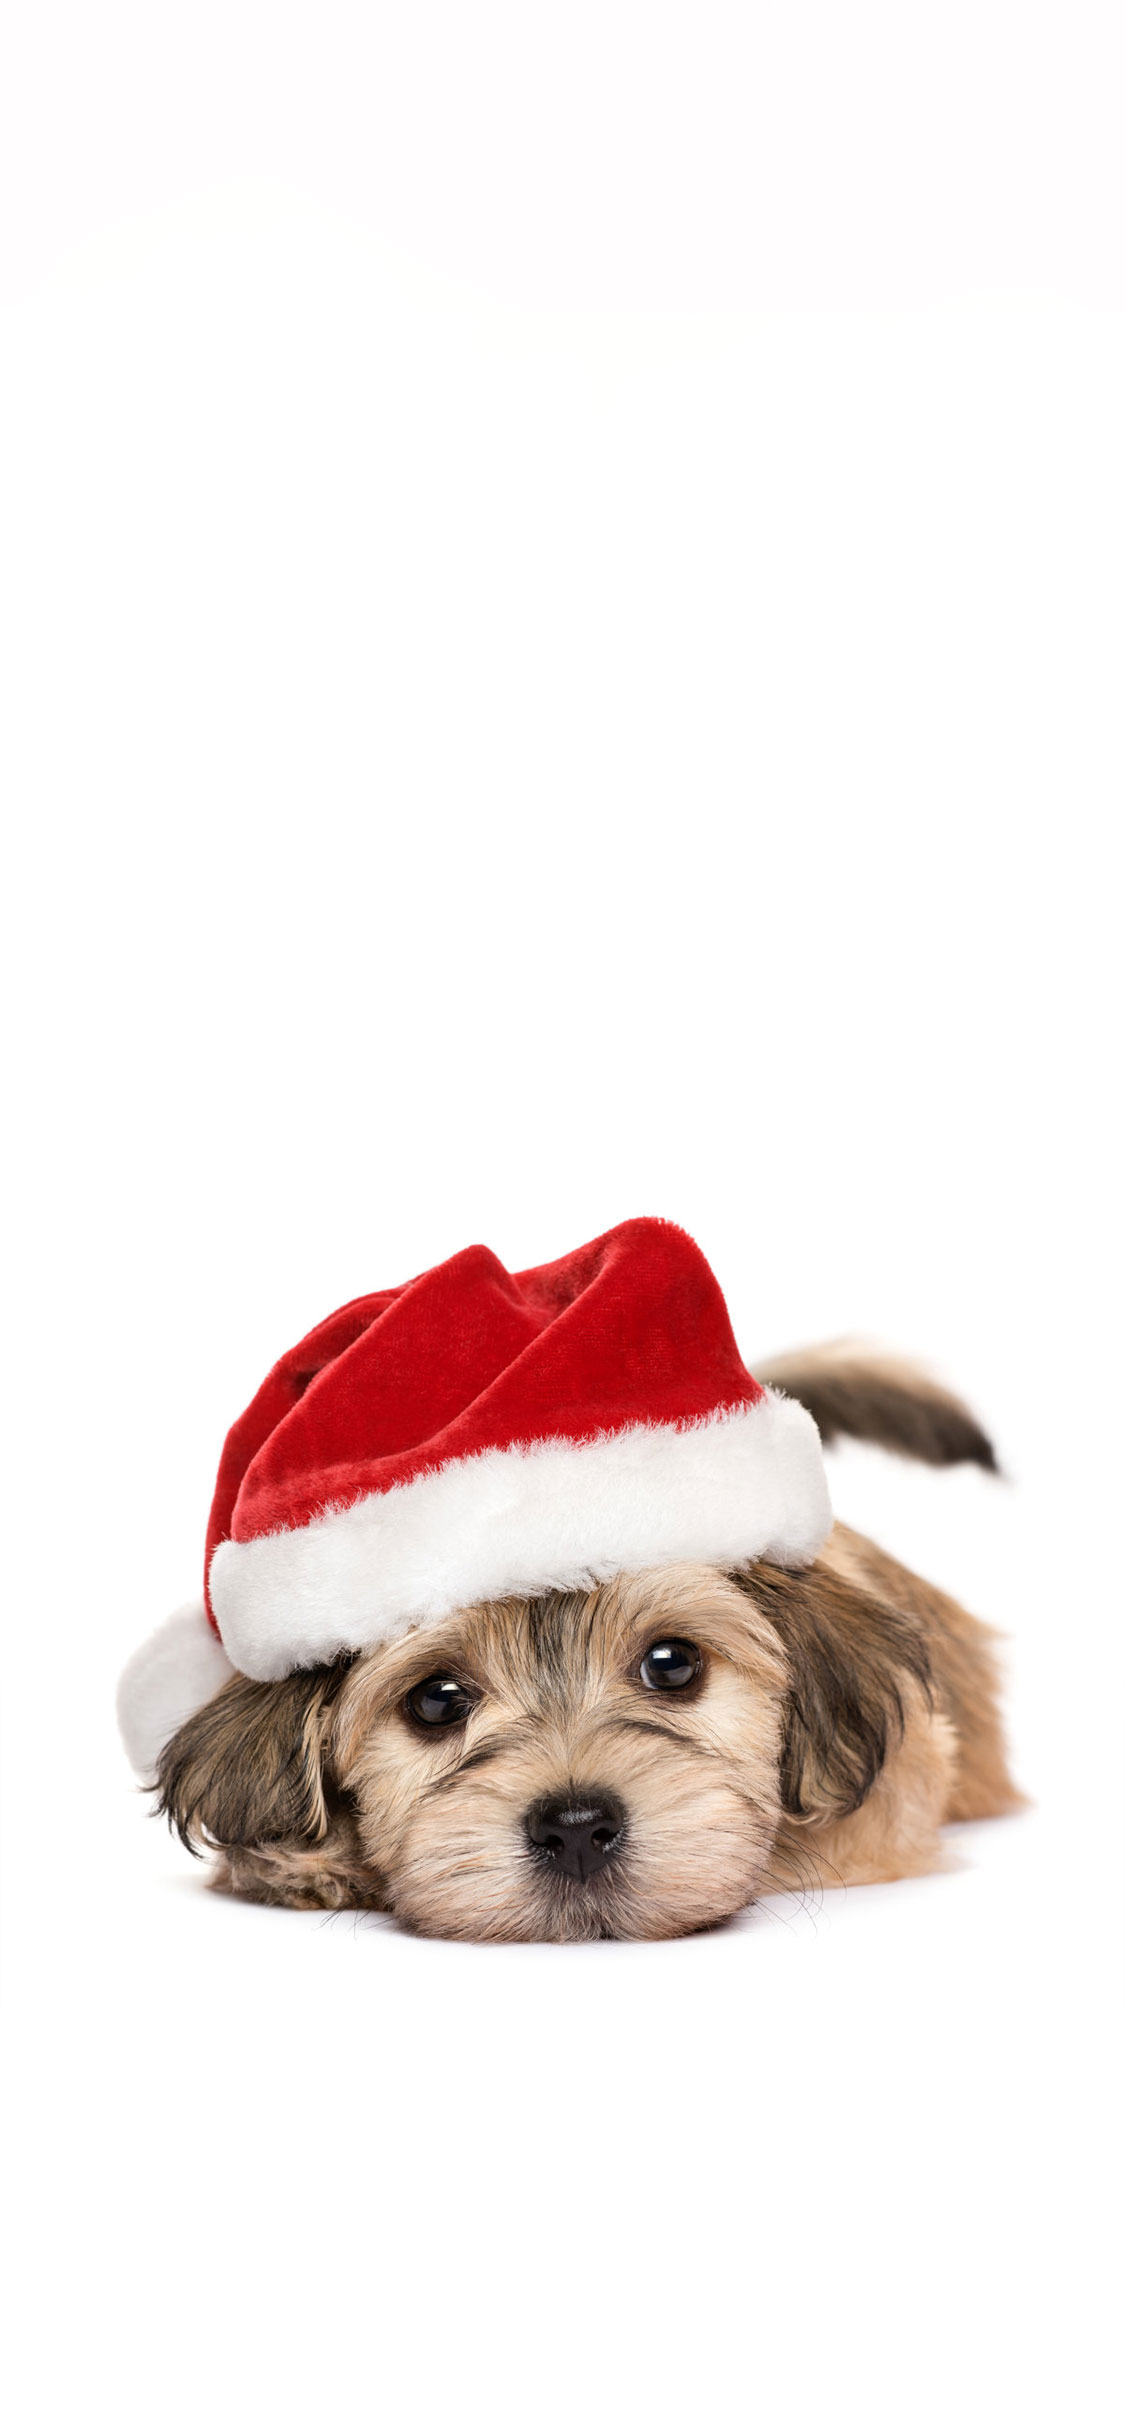 Dog Wearing Christmas Hat - HD Wallpaper 